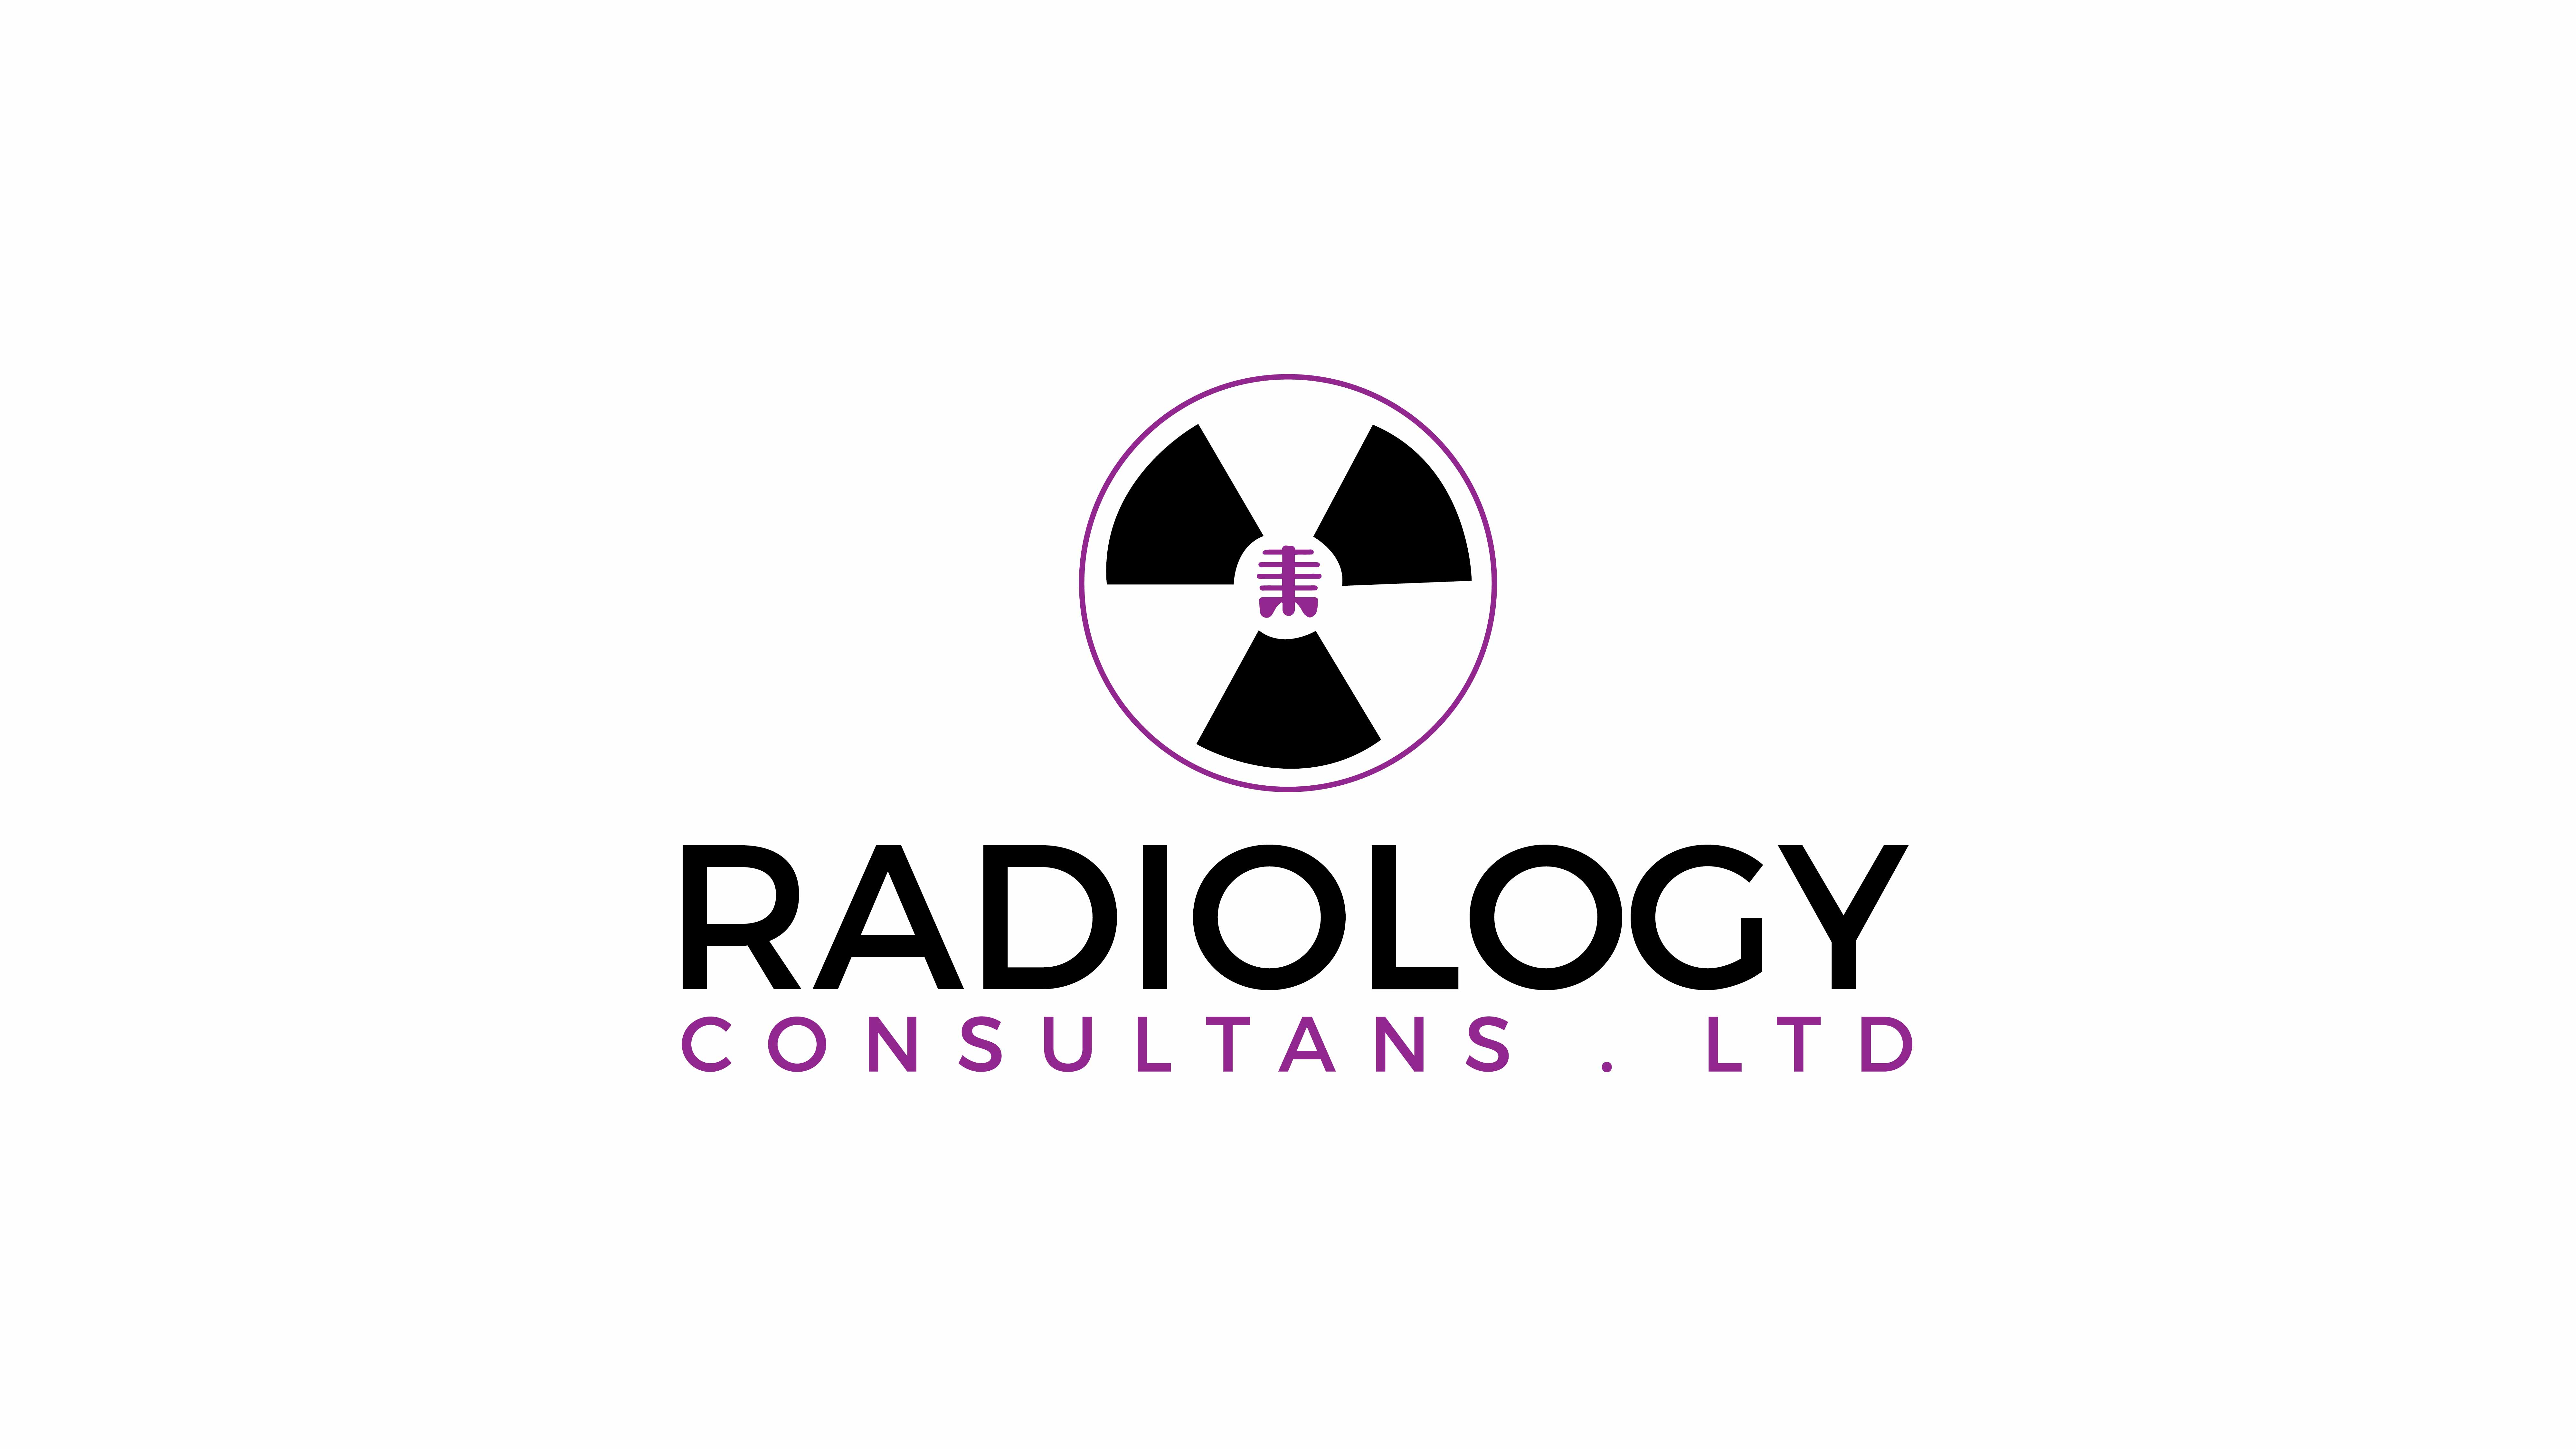 Radiology Logo - Logo Design #211 | 'Radiology Consultants, Ltd' design project ...